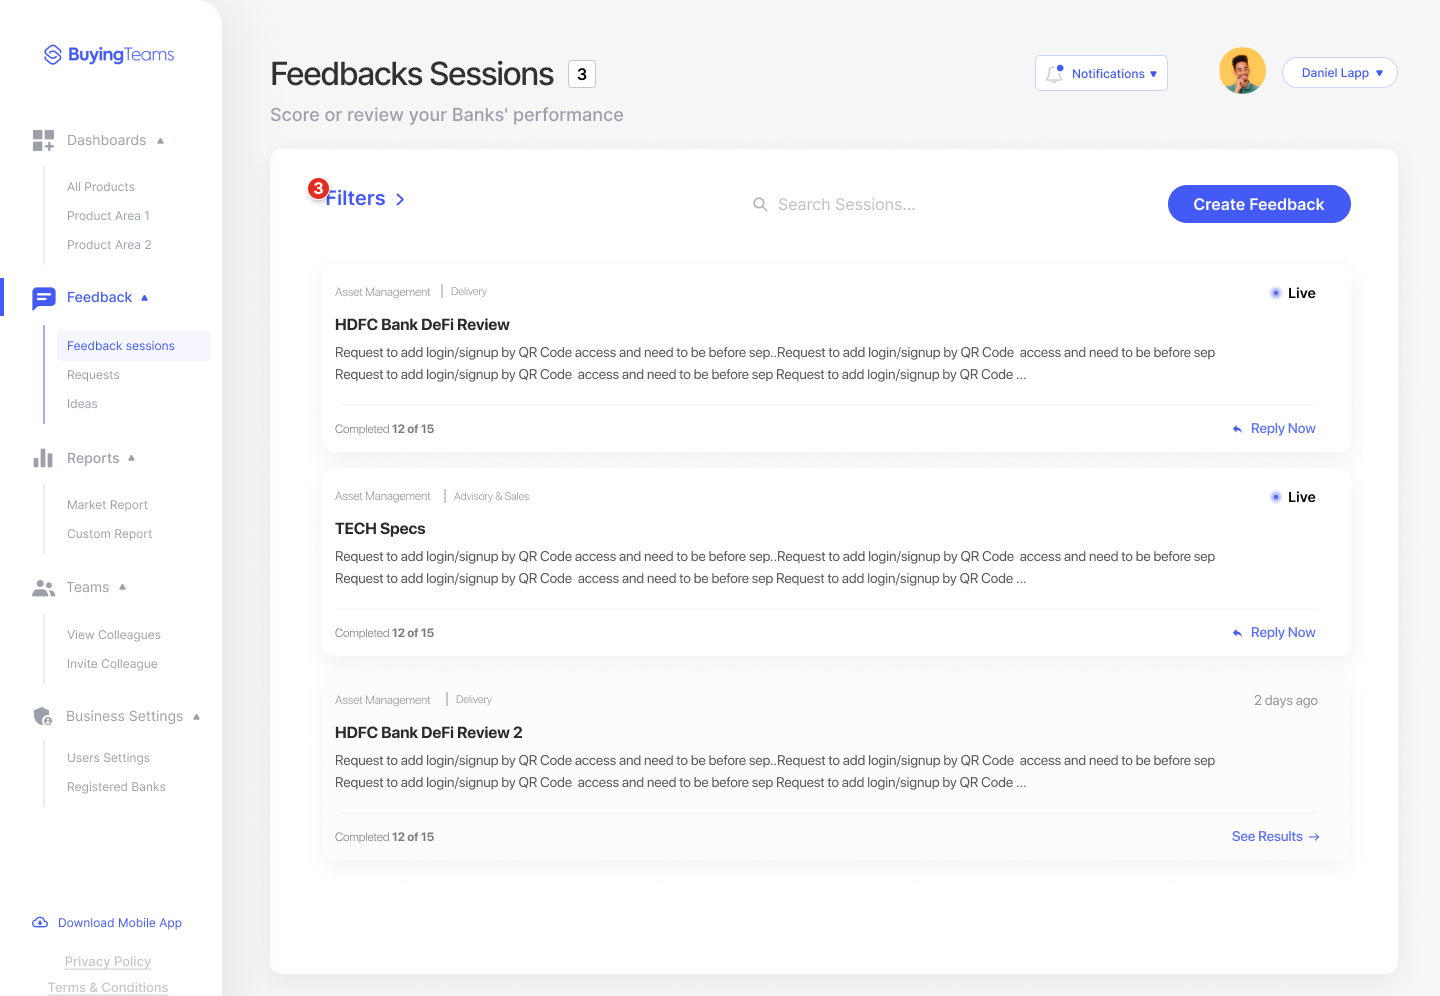 Reply feedback session in BuyingTeams web platform